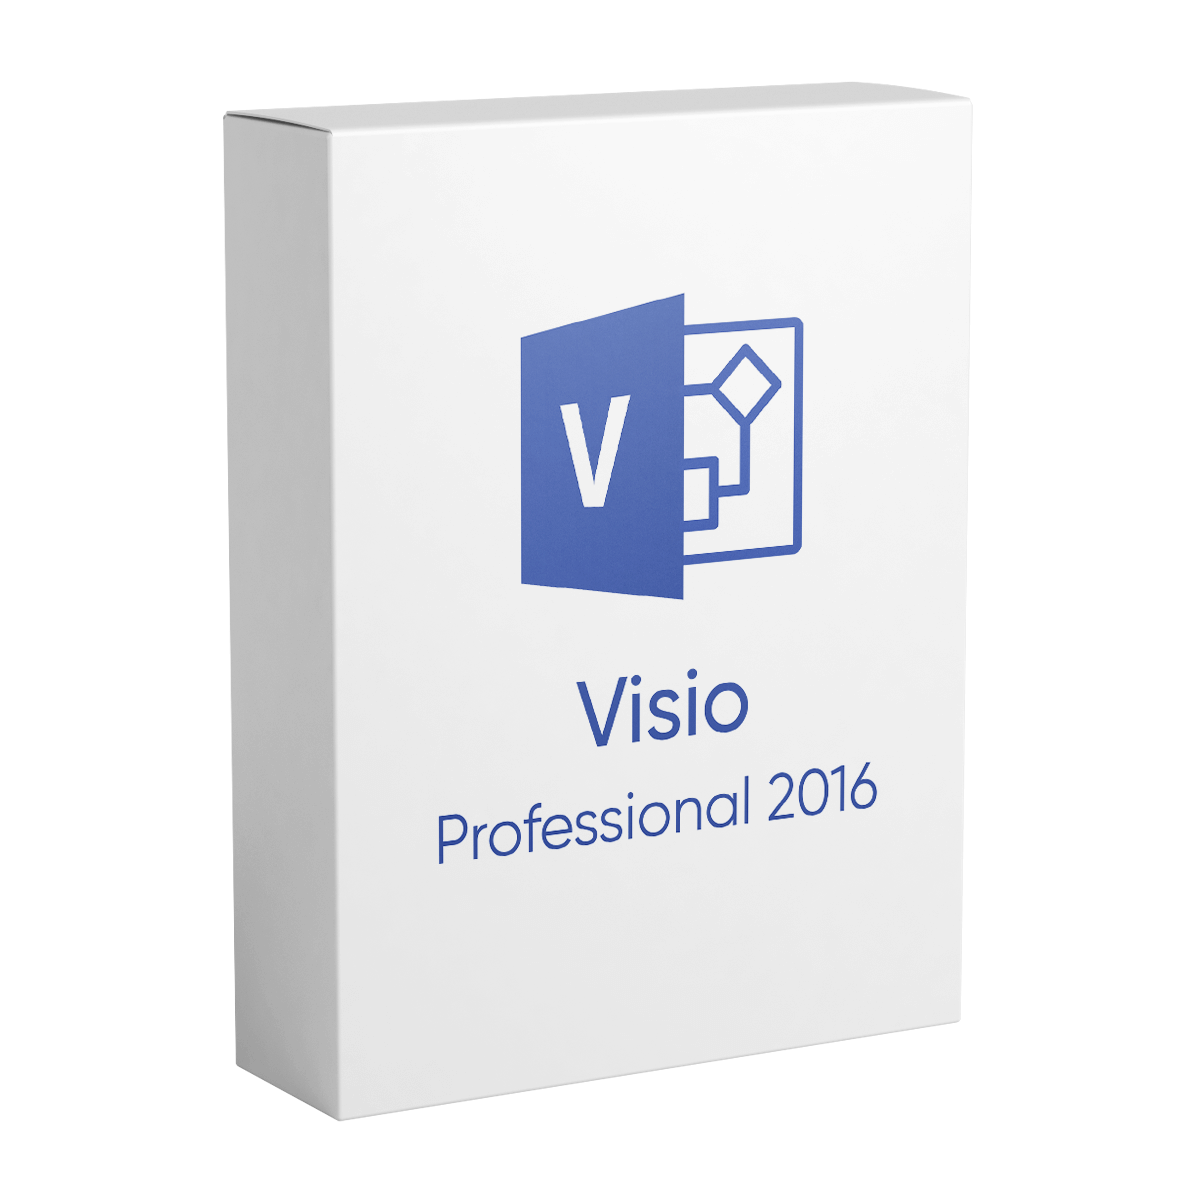 Visio Professional 2016 - Lifetime License for 1 PC